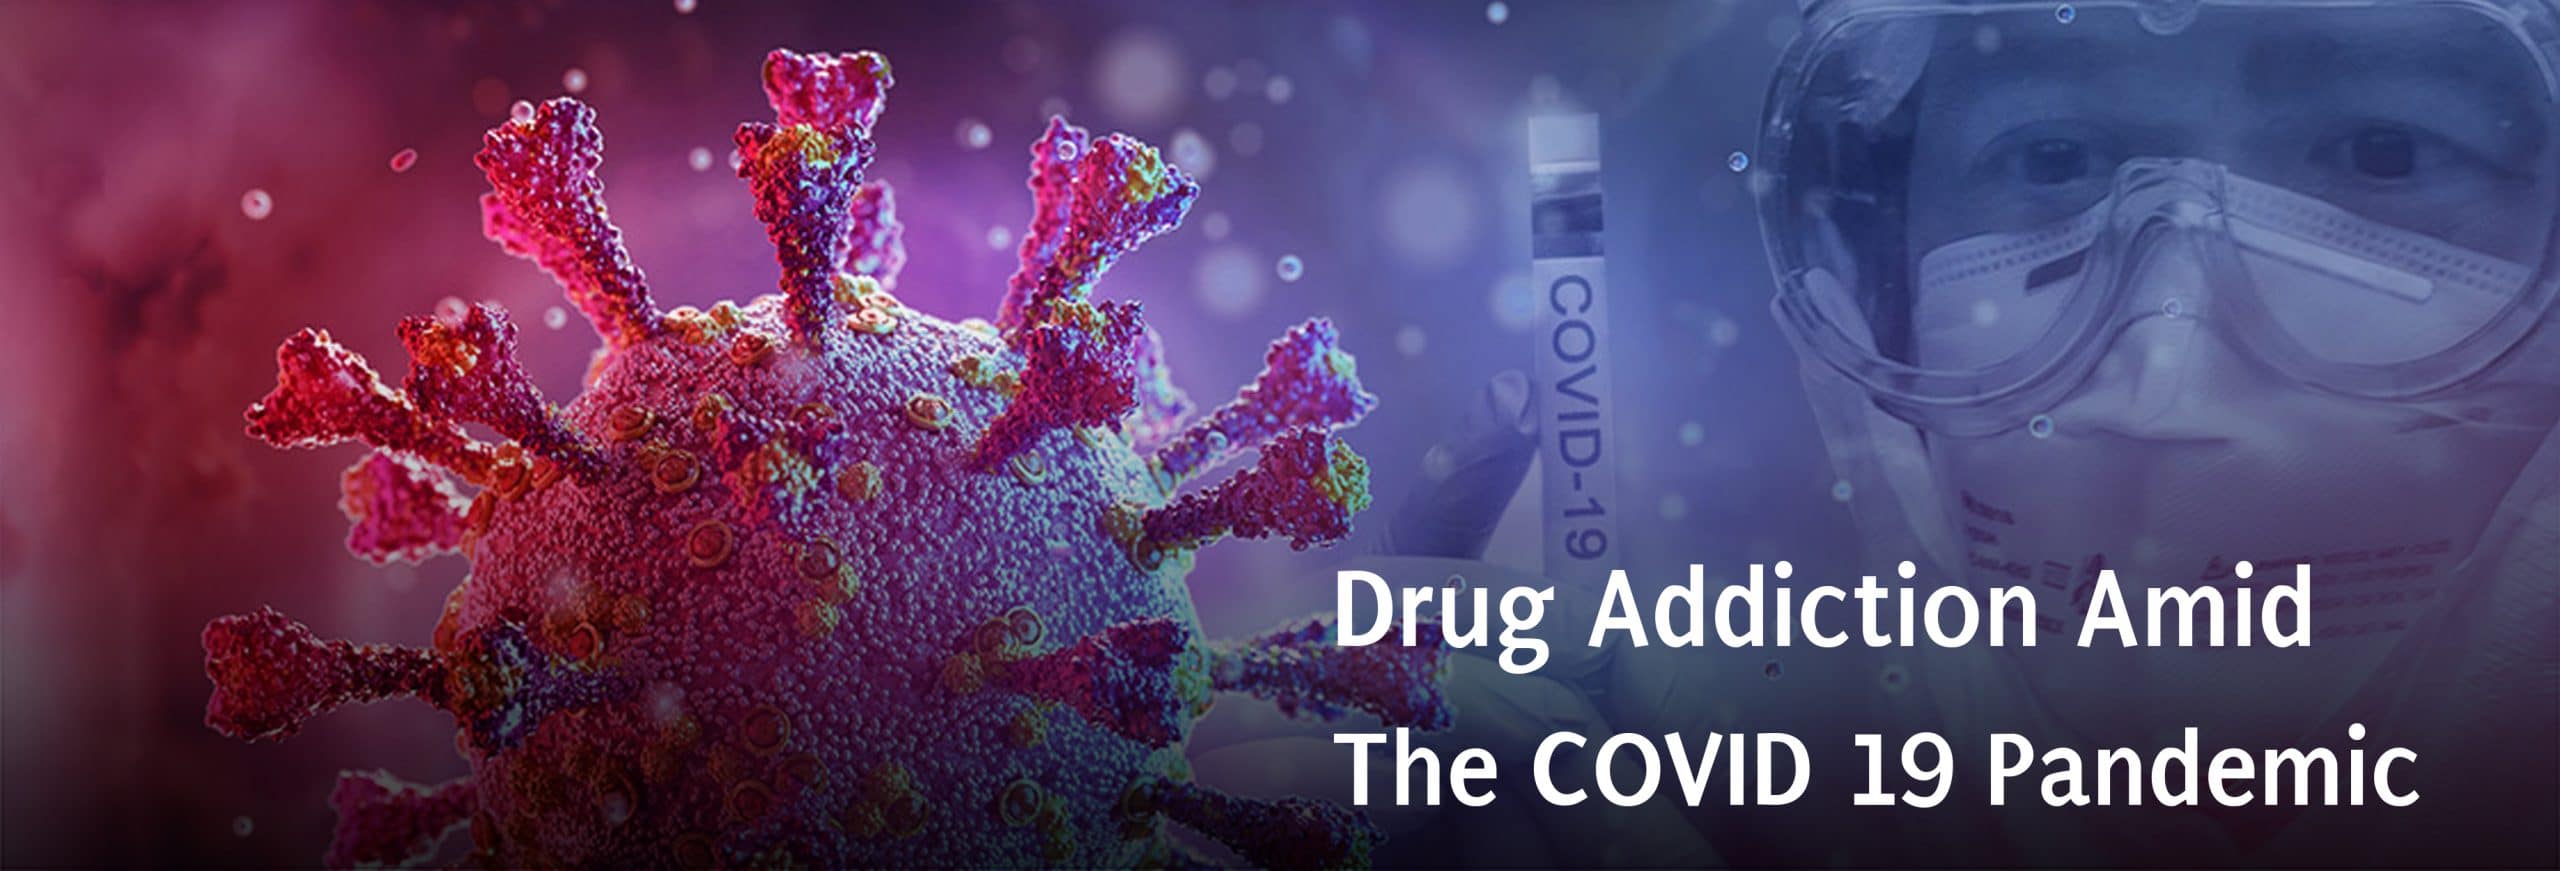 Drug Addiction Amid The COVID 19 Pandemic